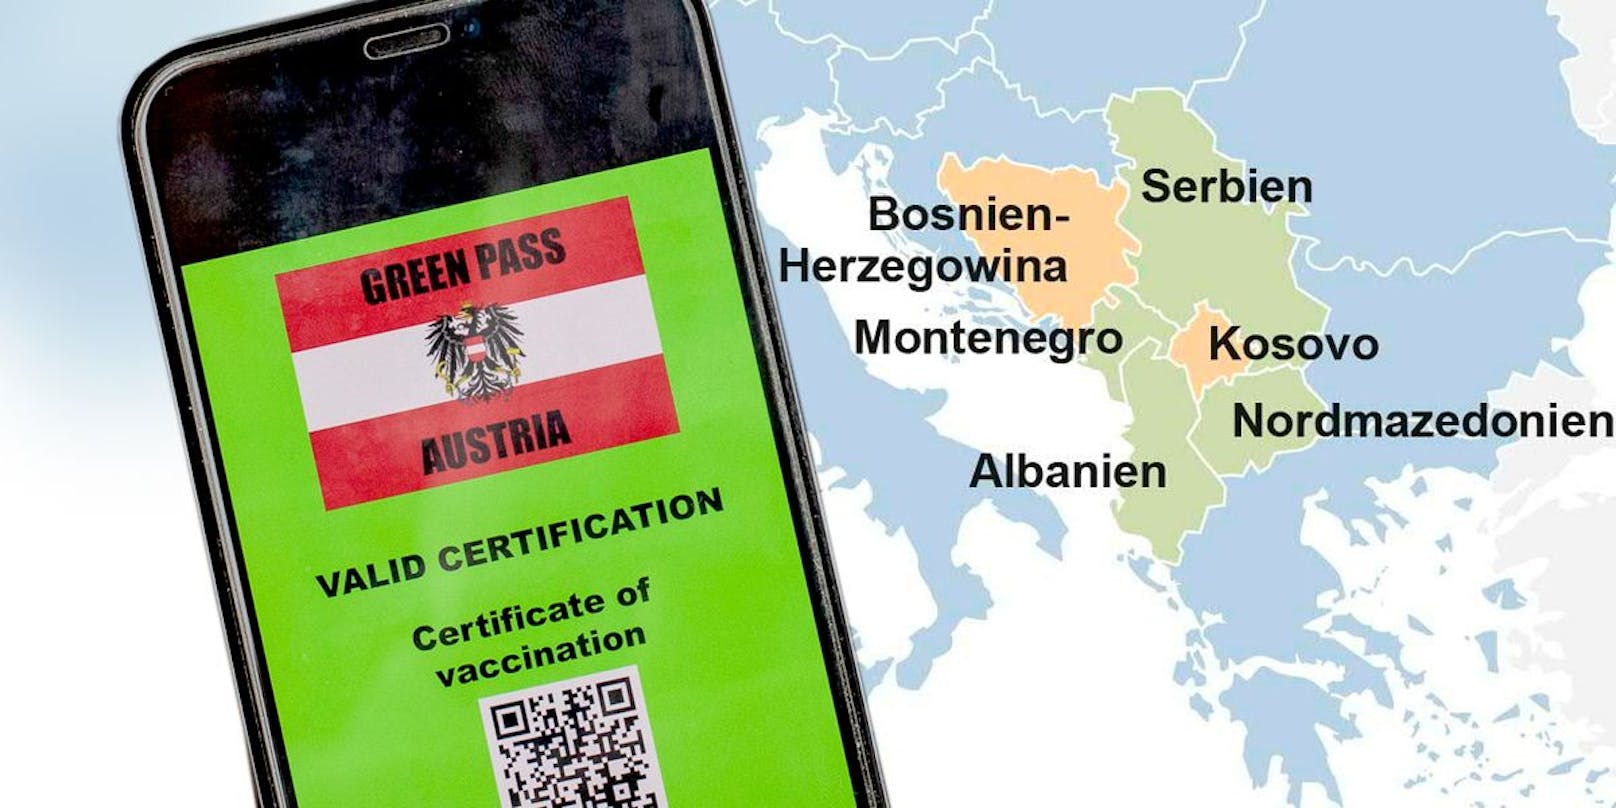 Edtstadler fordert: Der Grüne Pass soll auch in den Westbalkanstaaten gelten.